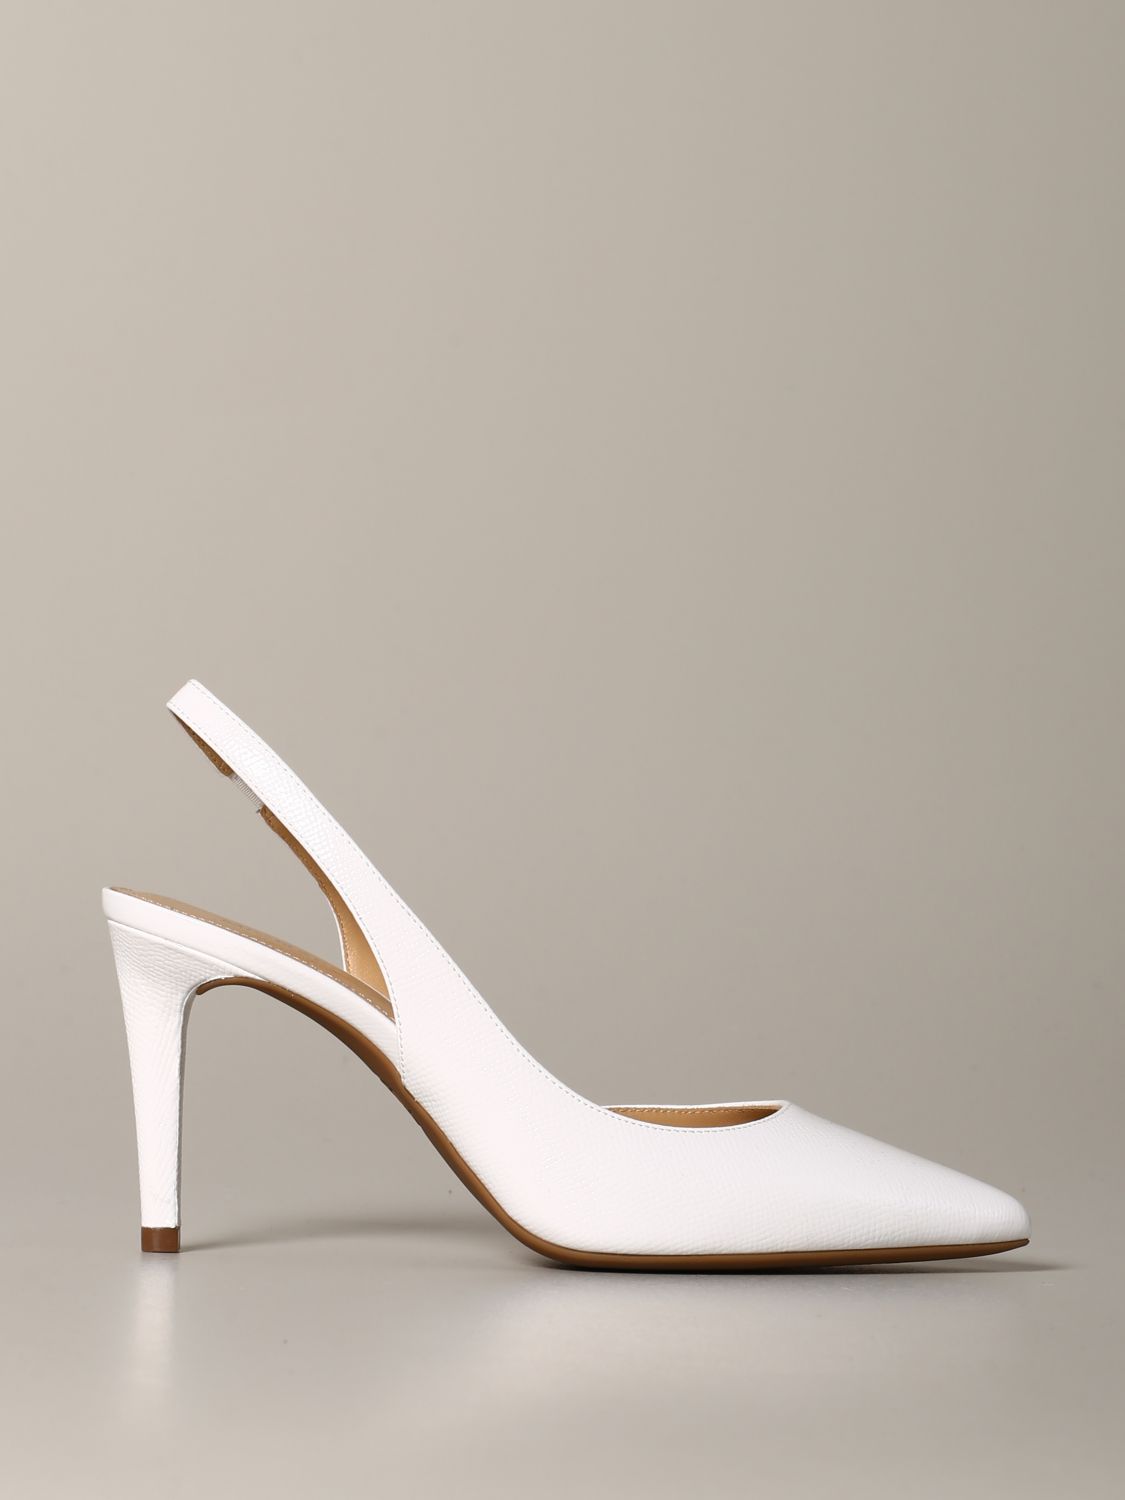 michael kors white shoes heels